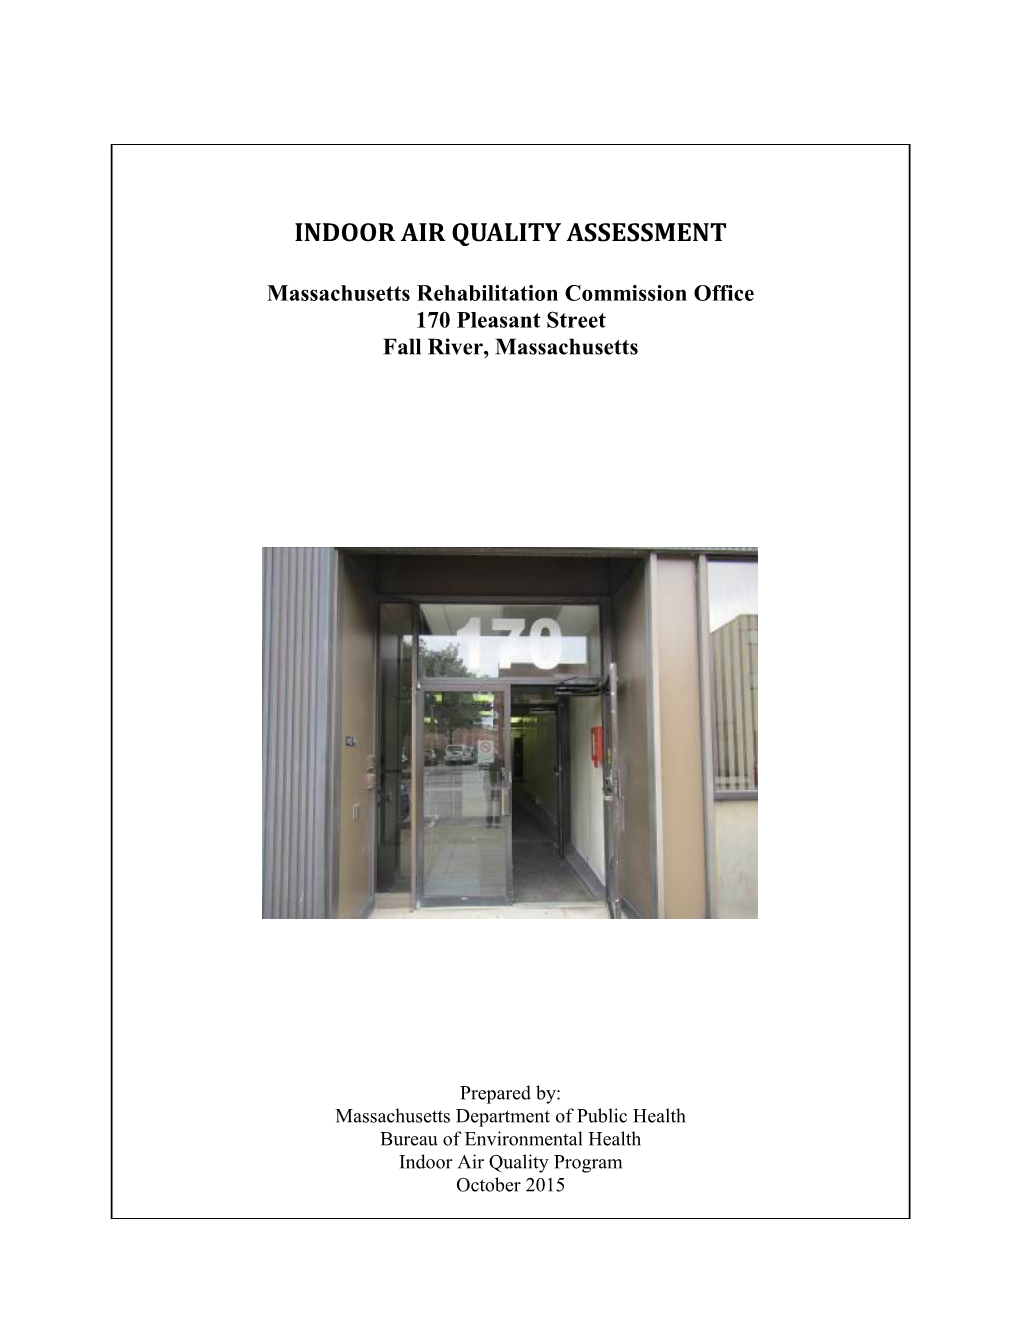 Indoor Air Quality Assessment-Massachusetts Rehabilitation Commission Office